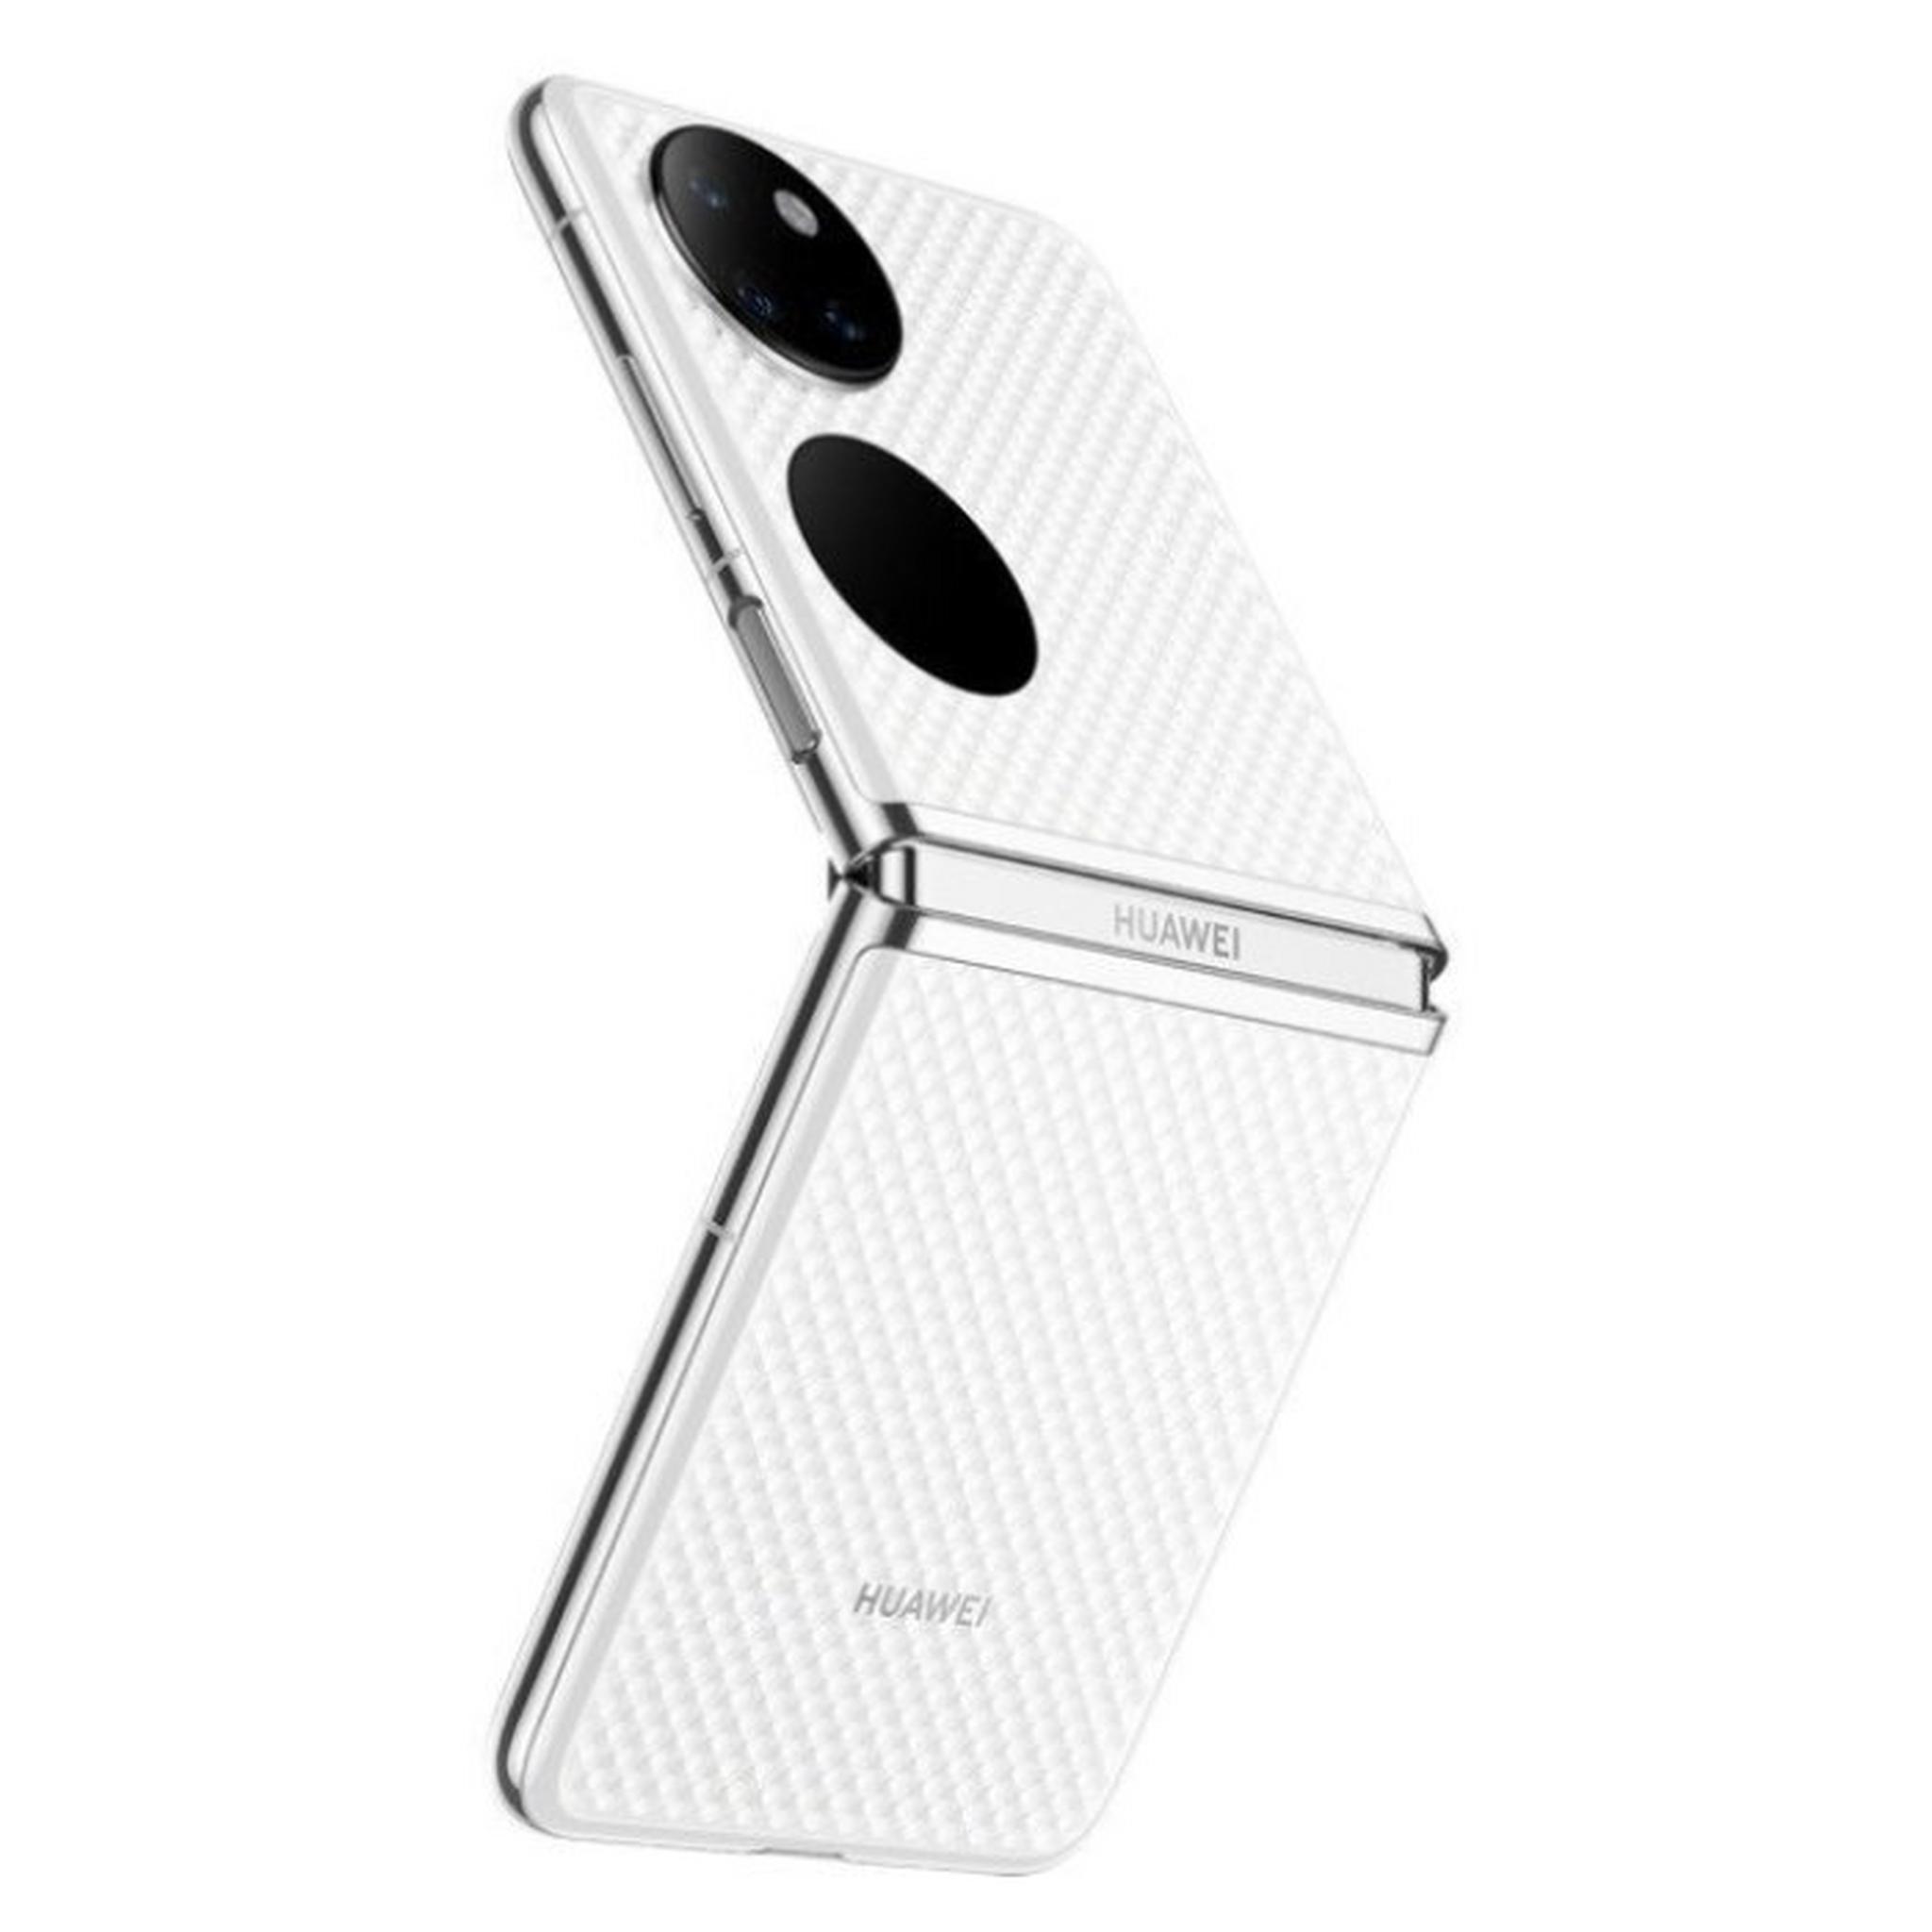 Pre-Order: Huawei P50 Pocket 4G 256GB Phone - White